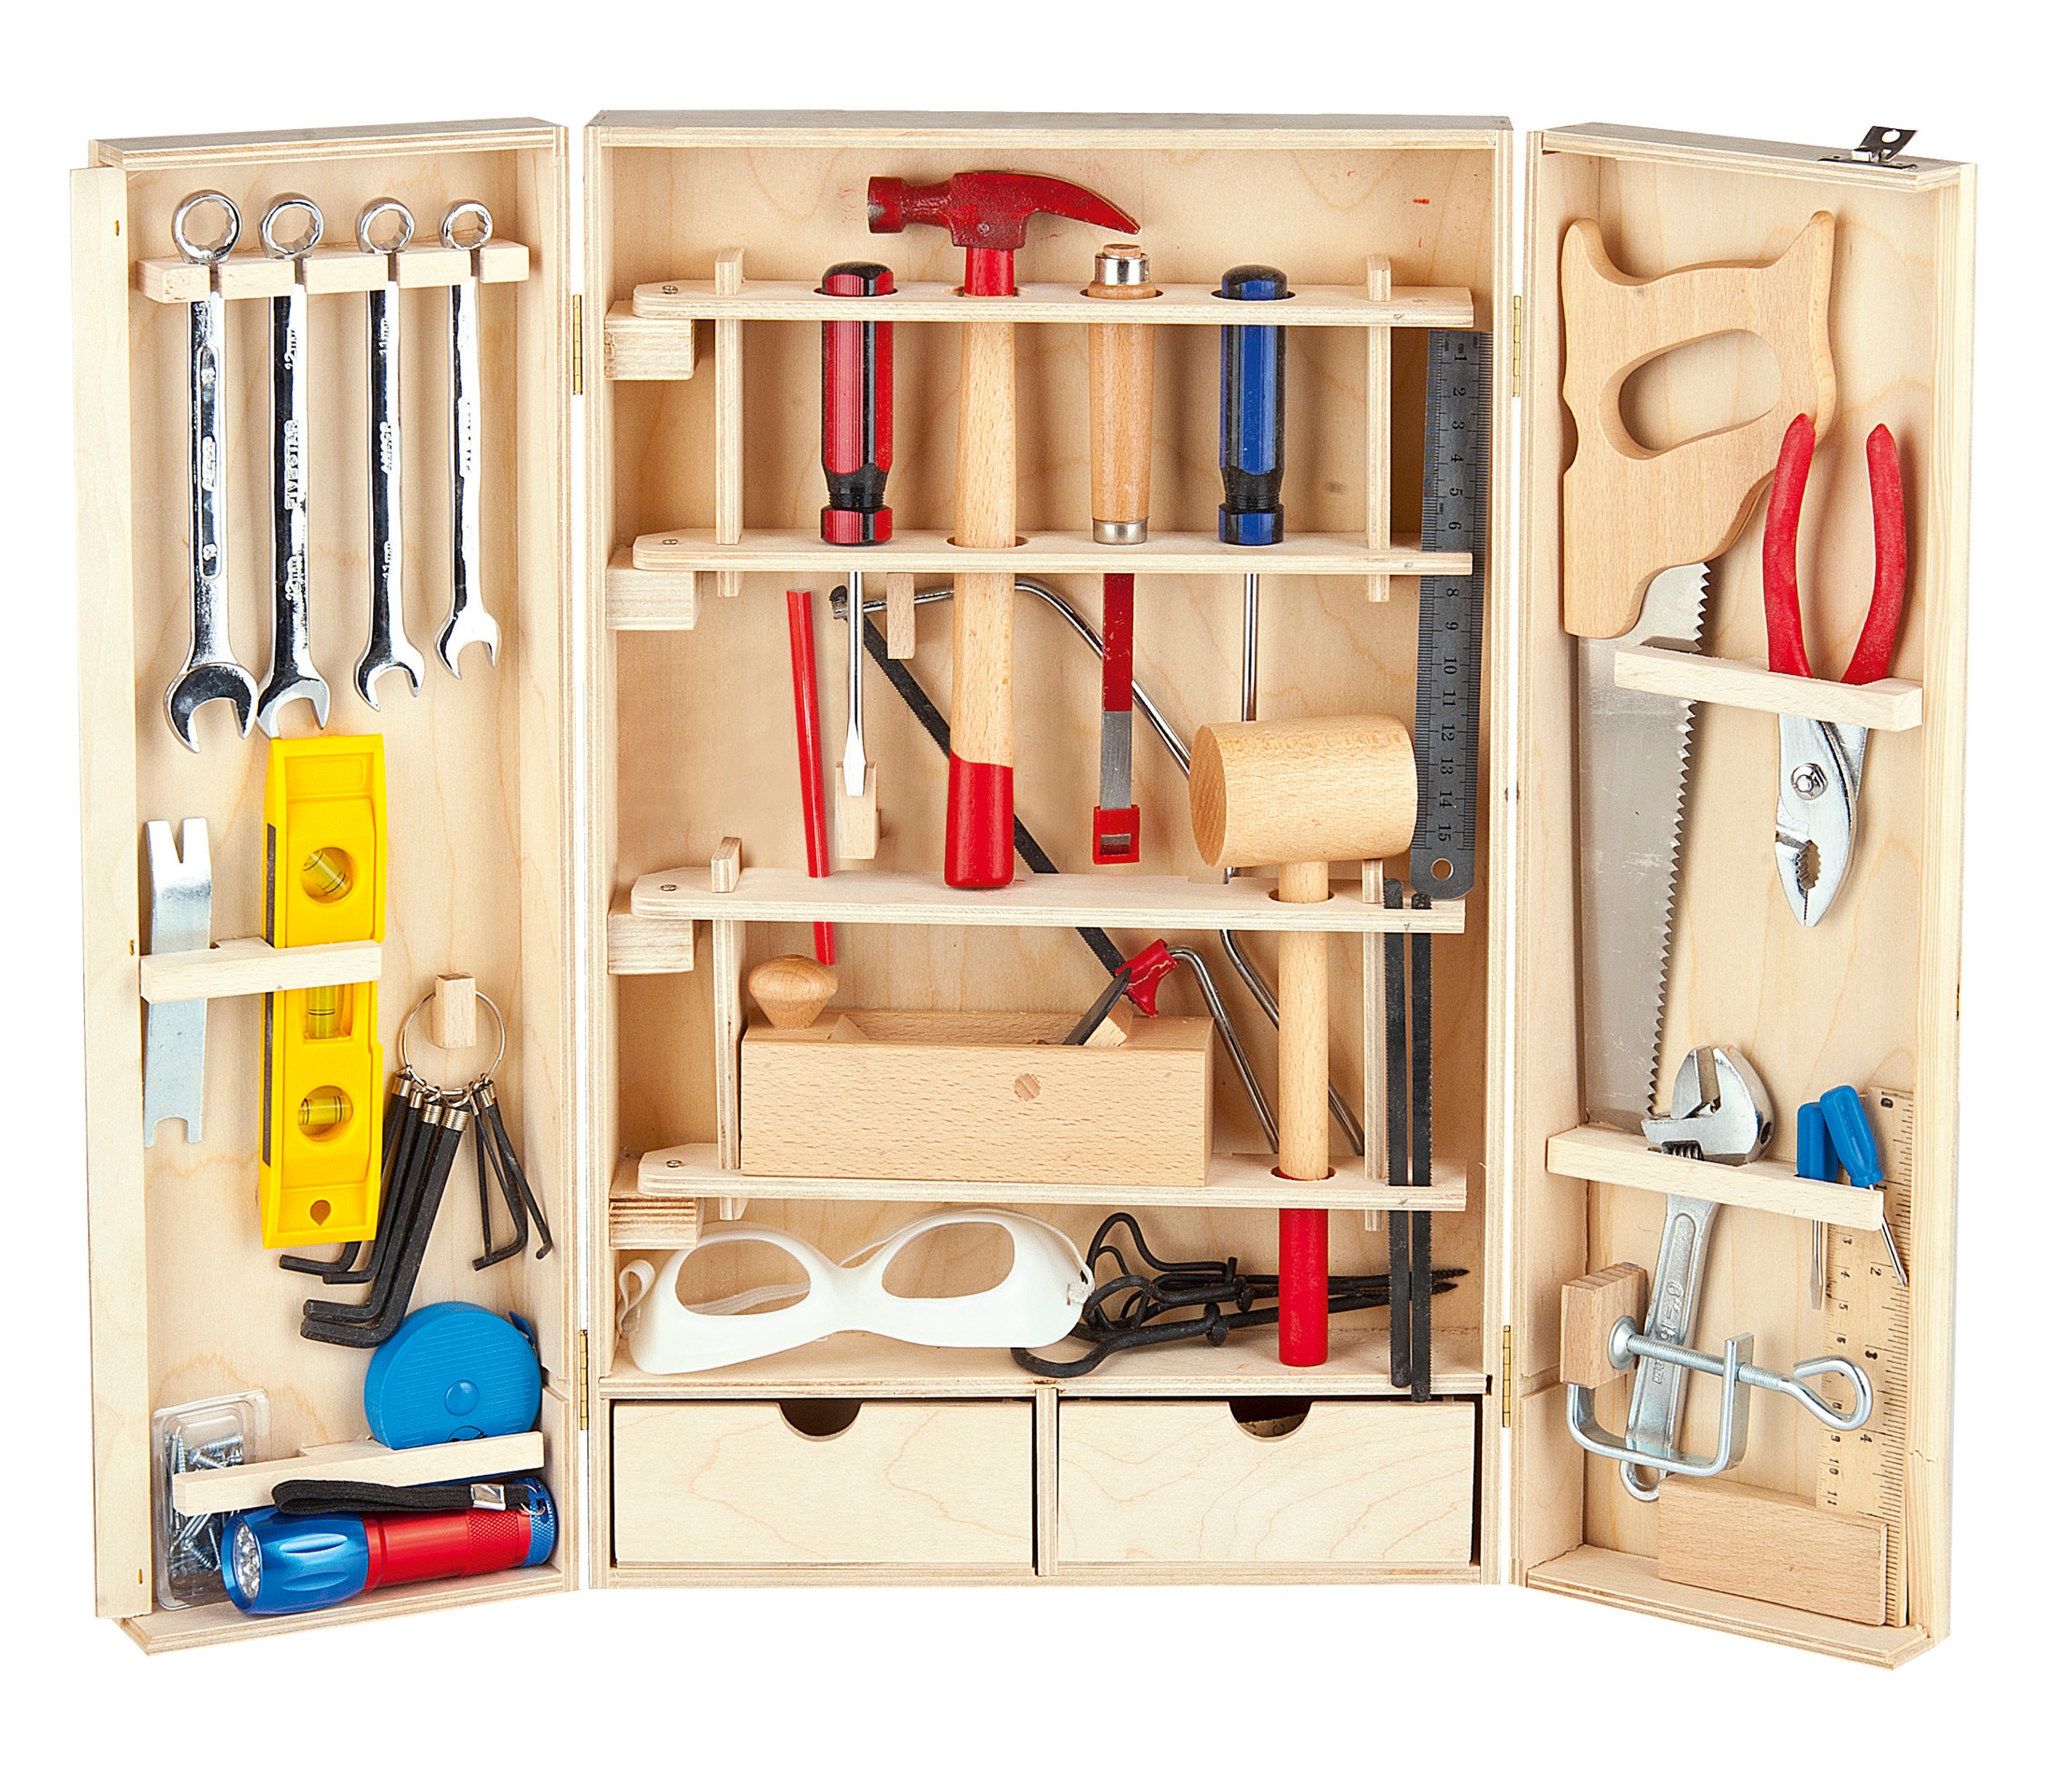 50 tools. Wooden Toolbox набор инструментов. Комплект инструментов Tool Kit 15-20120. Набор настоящих инструментов для мальчика. Набор инструментов детский настоящий.